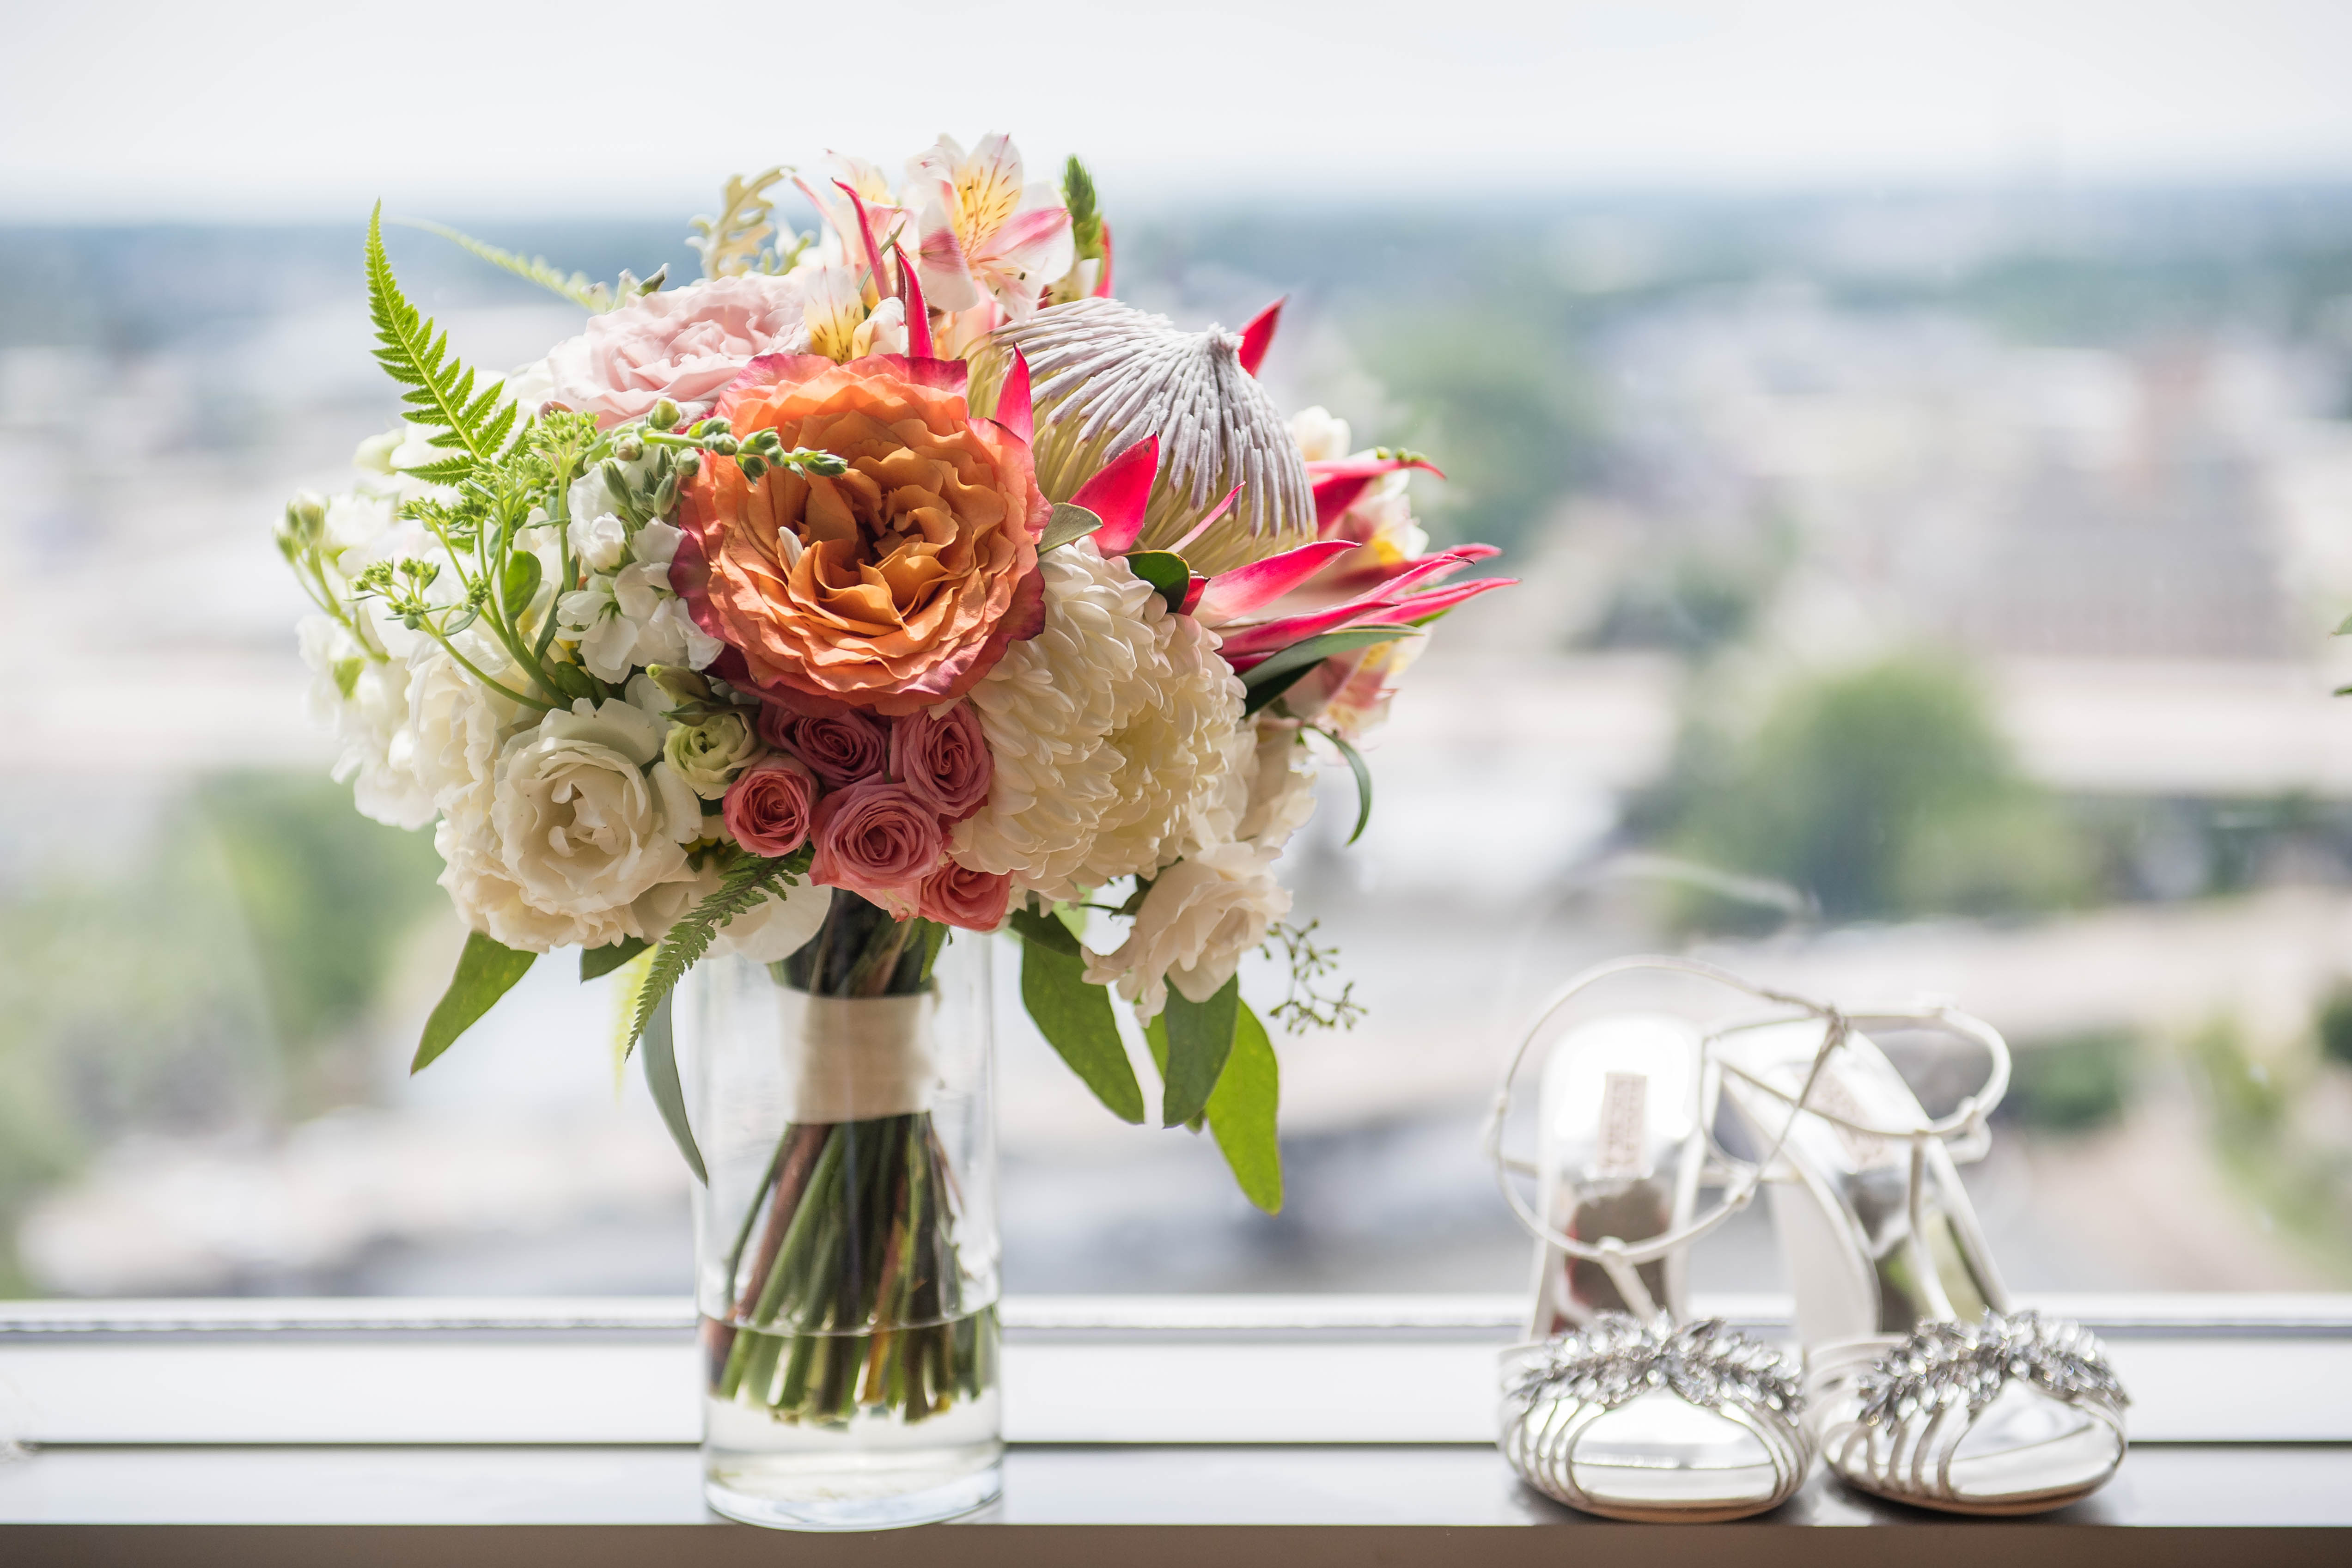 JS Weddings and Events, Grand Rapids Wedding Planner and Floral Designer - Grand Rapids Art Museum Midcentury Modern Wedding